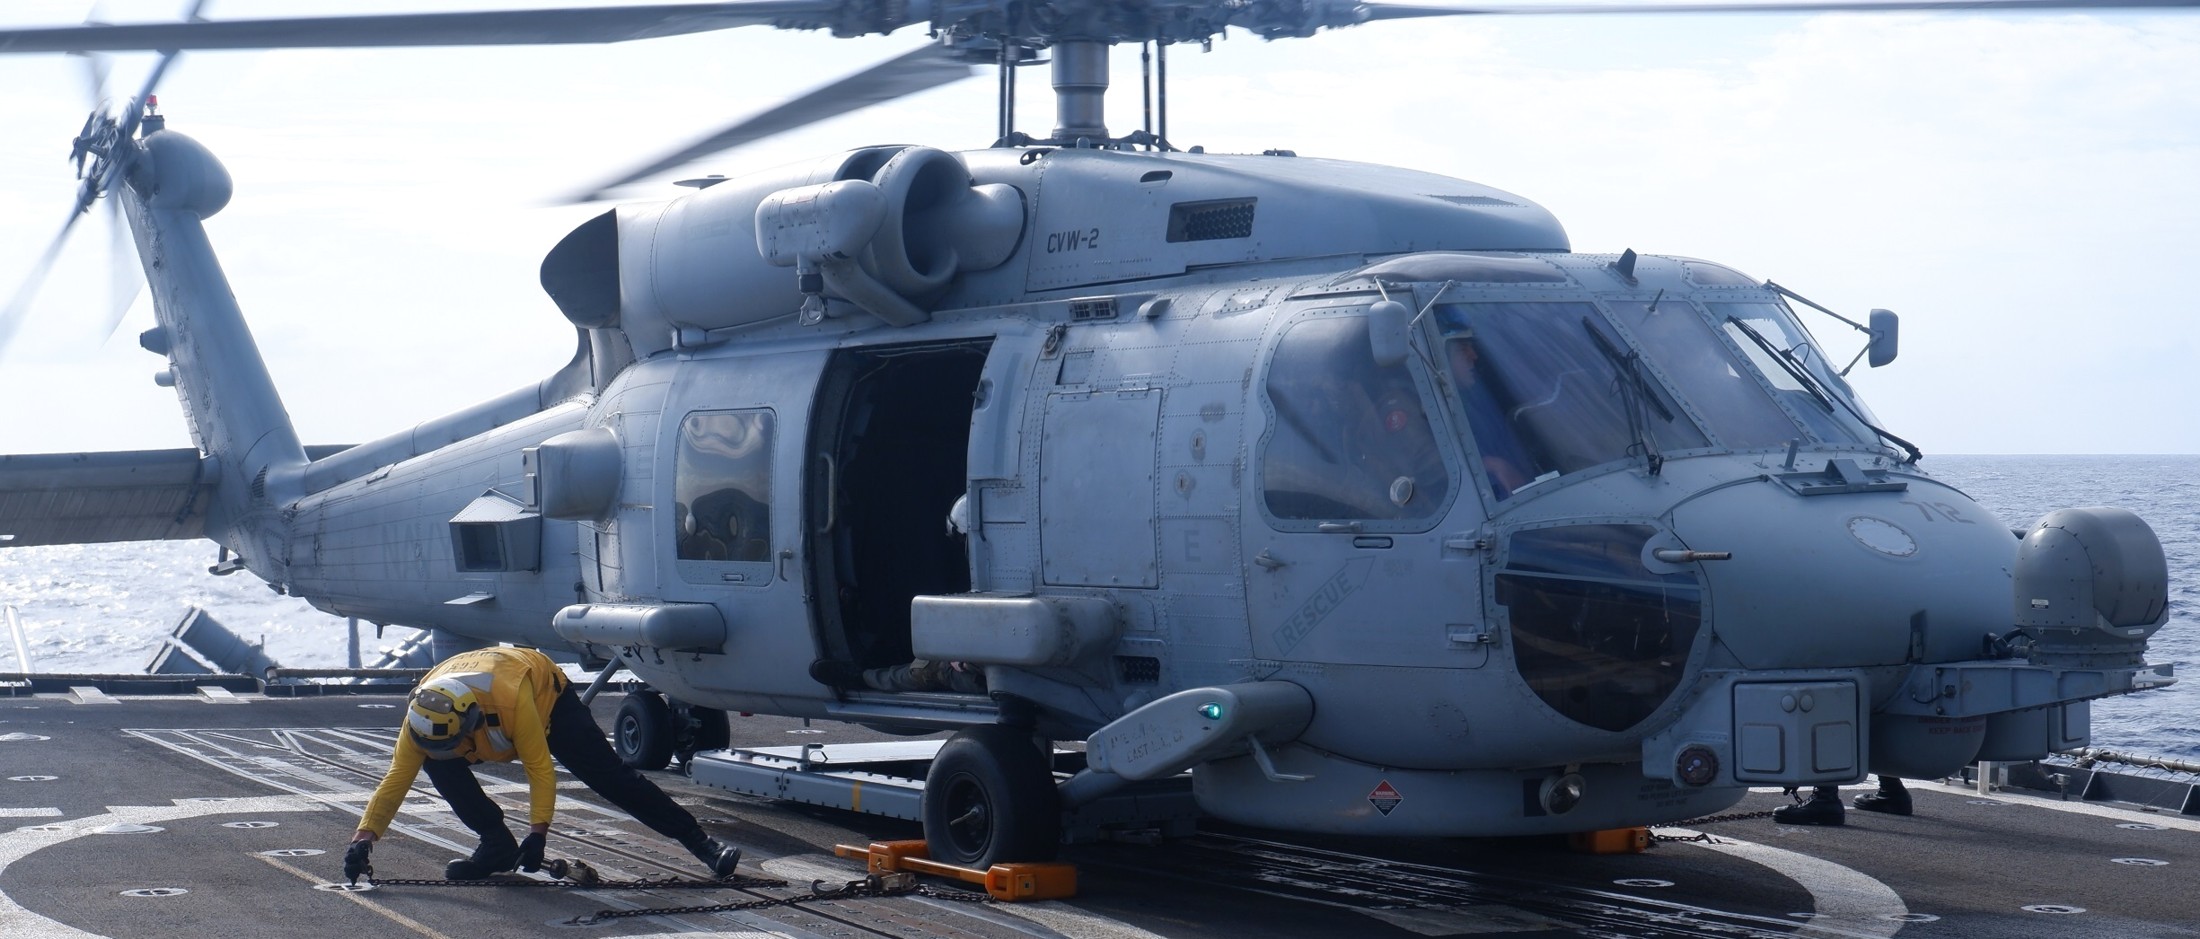 hsm-78 blue hawks helicopter maritime strike squadron mh-60r seahawk us navy uss lake champlain cg-57 66